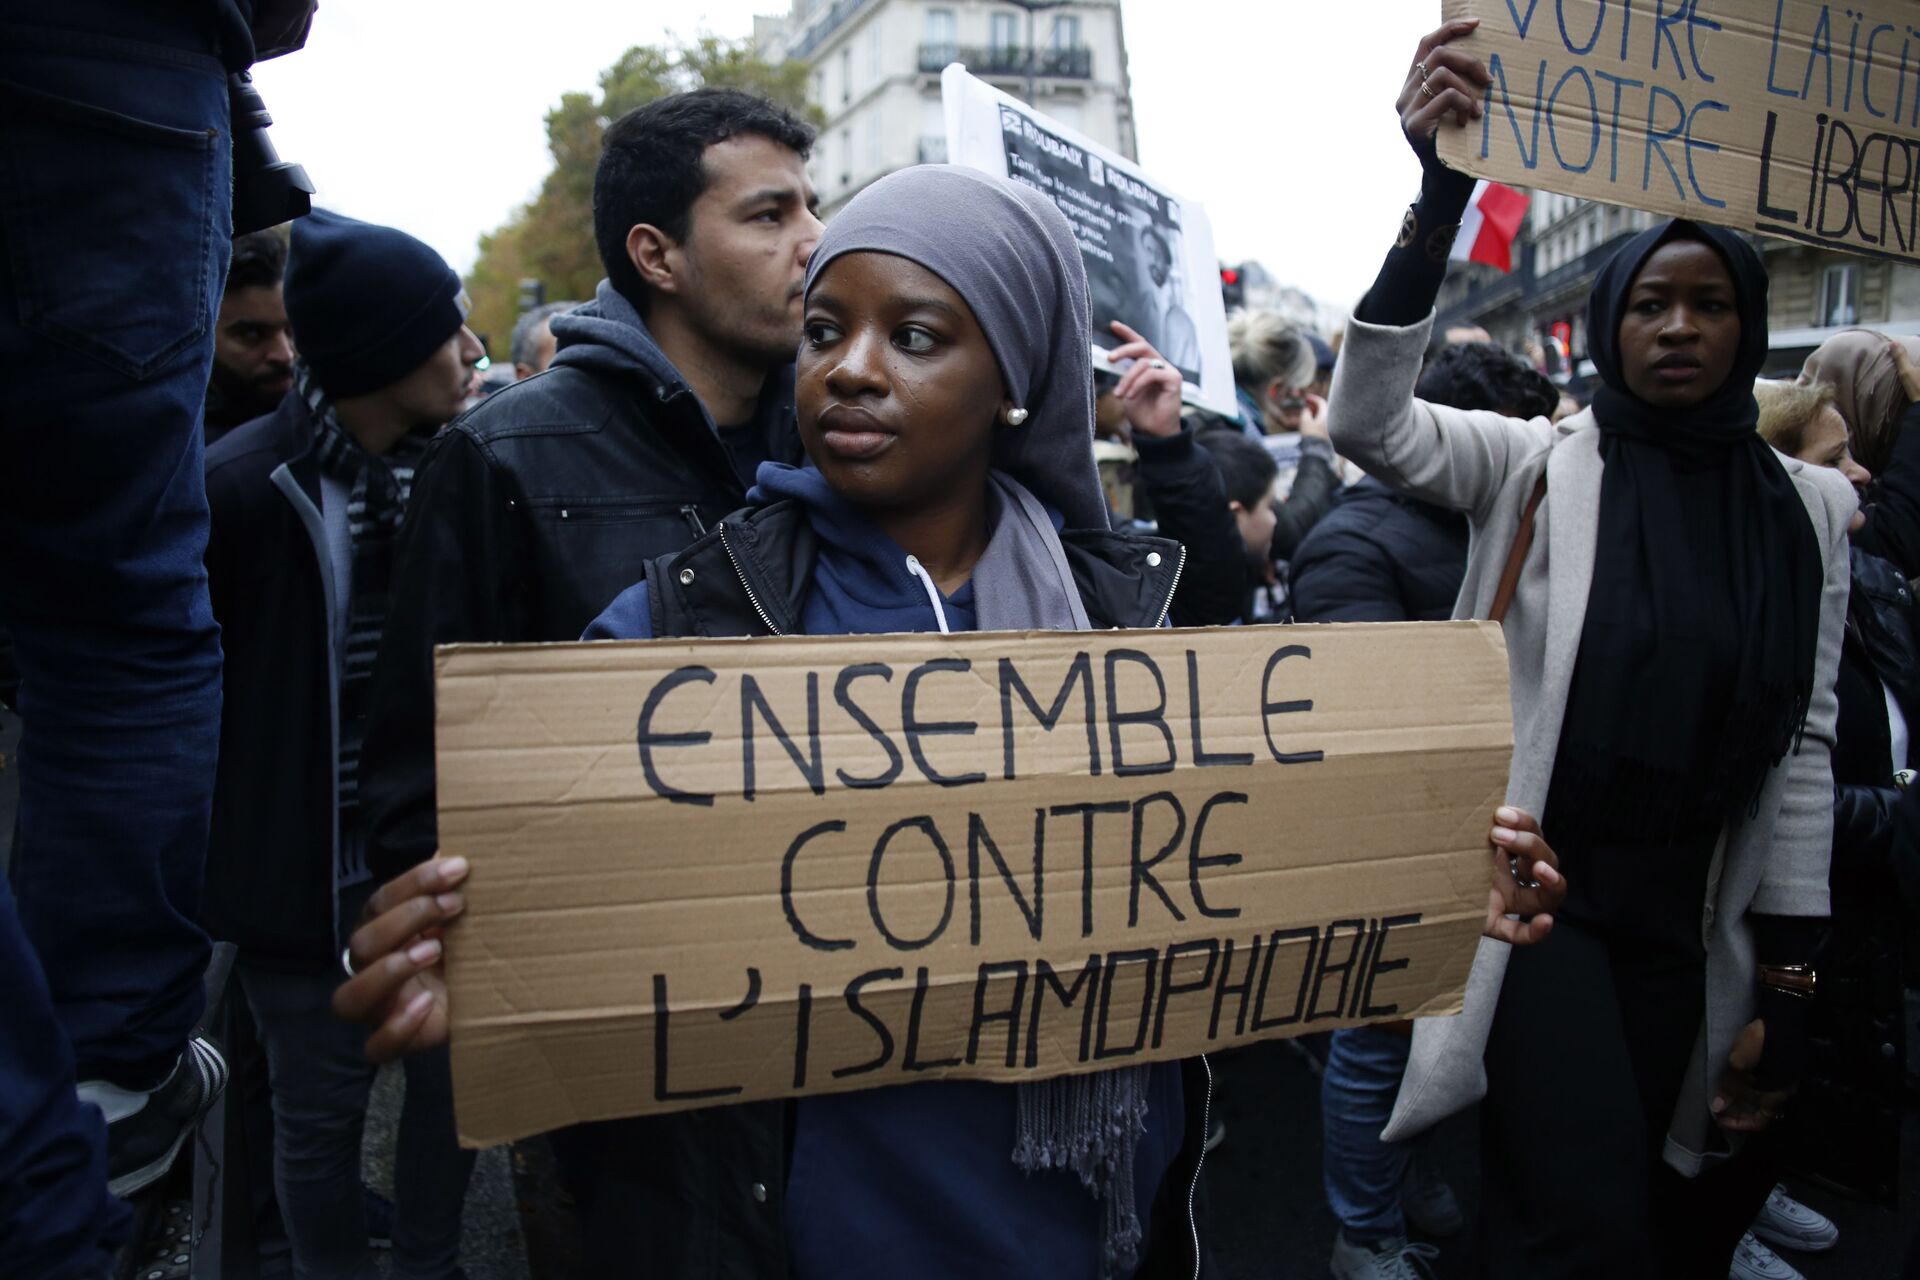 'Islamoesquerdismo' na França: Macron adere à agenda de extrema direita para derrotar Le Pen? - Sputnik Brasil, 1920, 12.03.2021